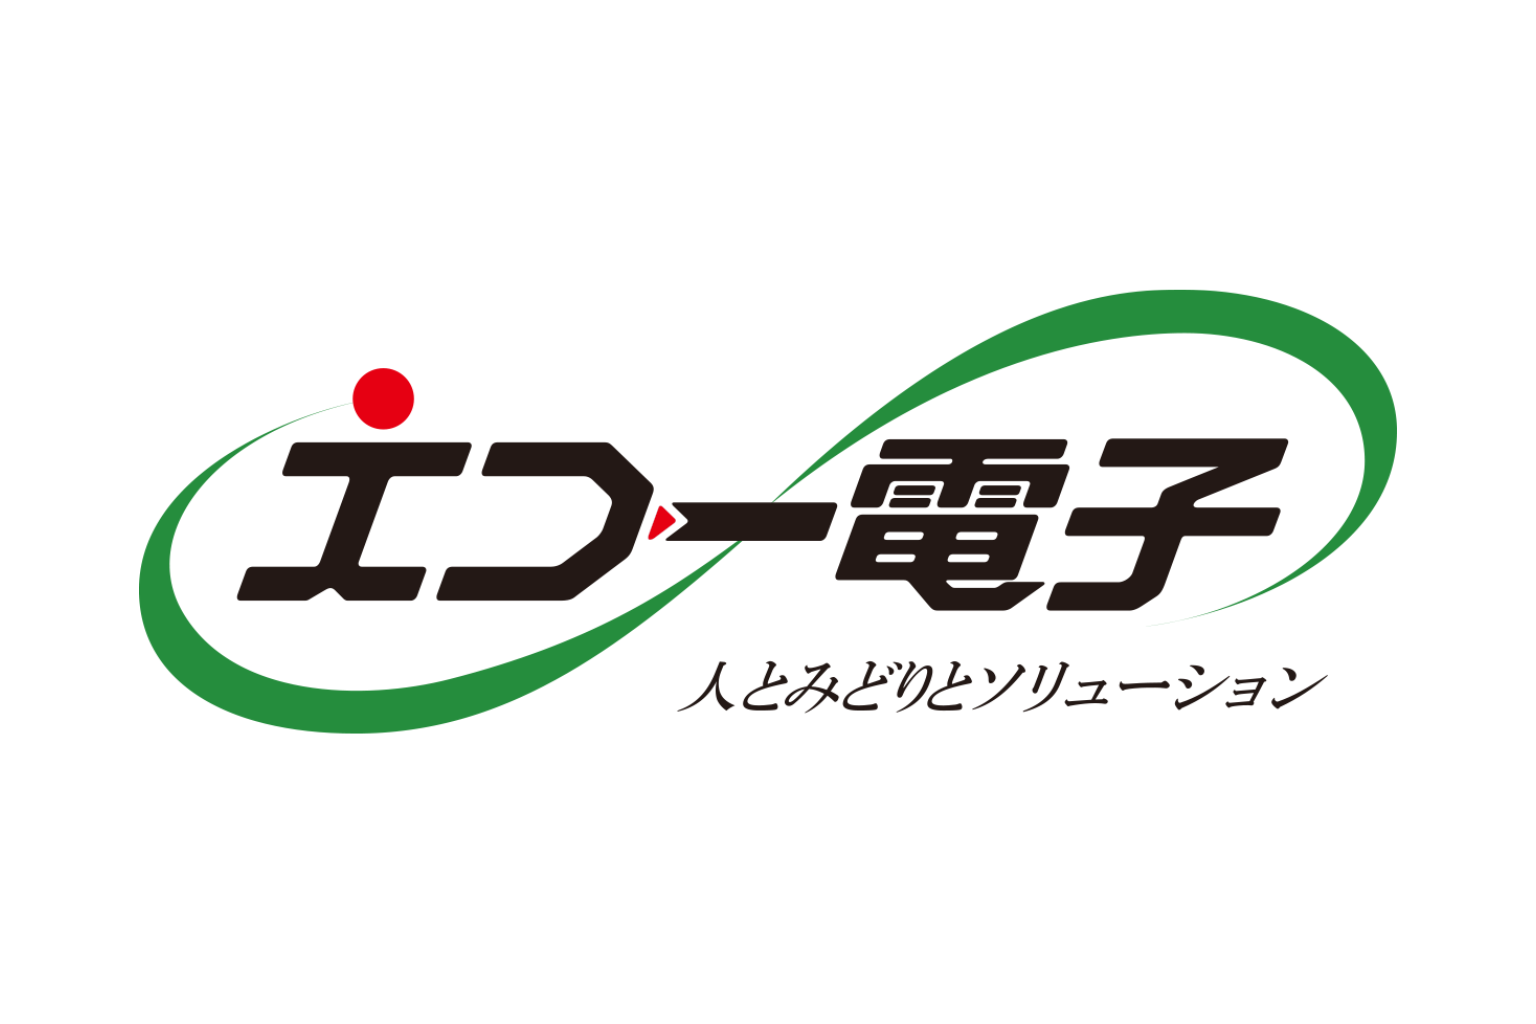 echo-electronics-industry-logo.png